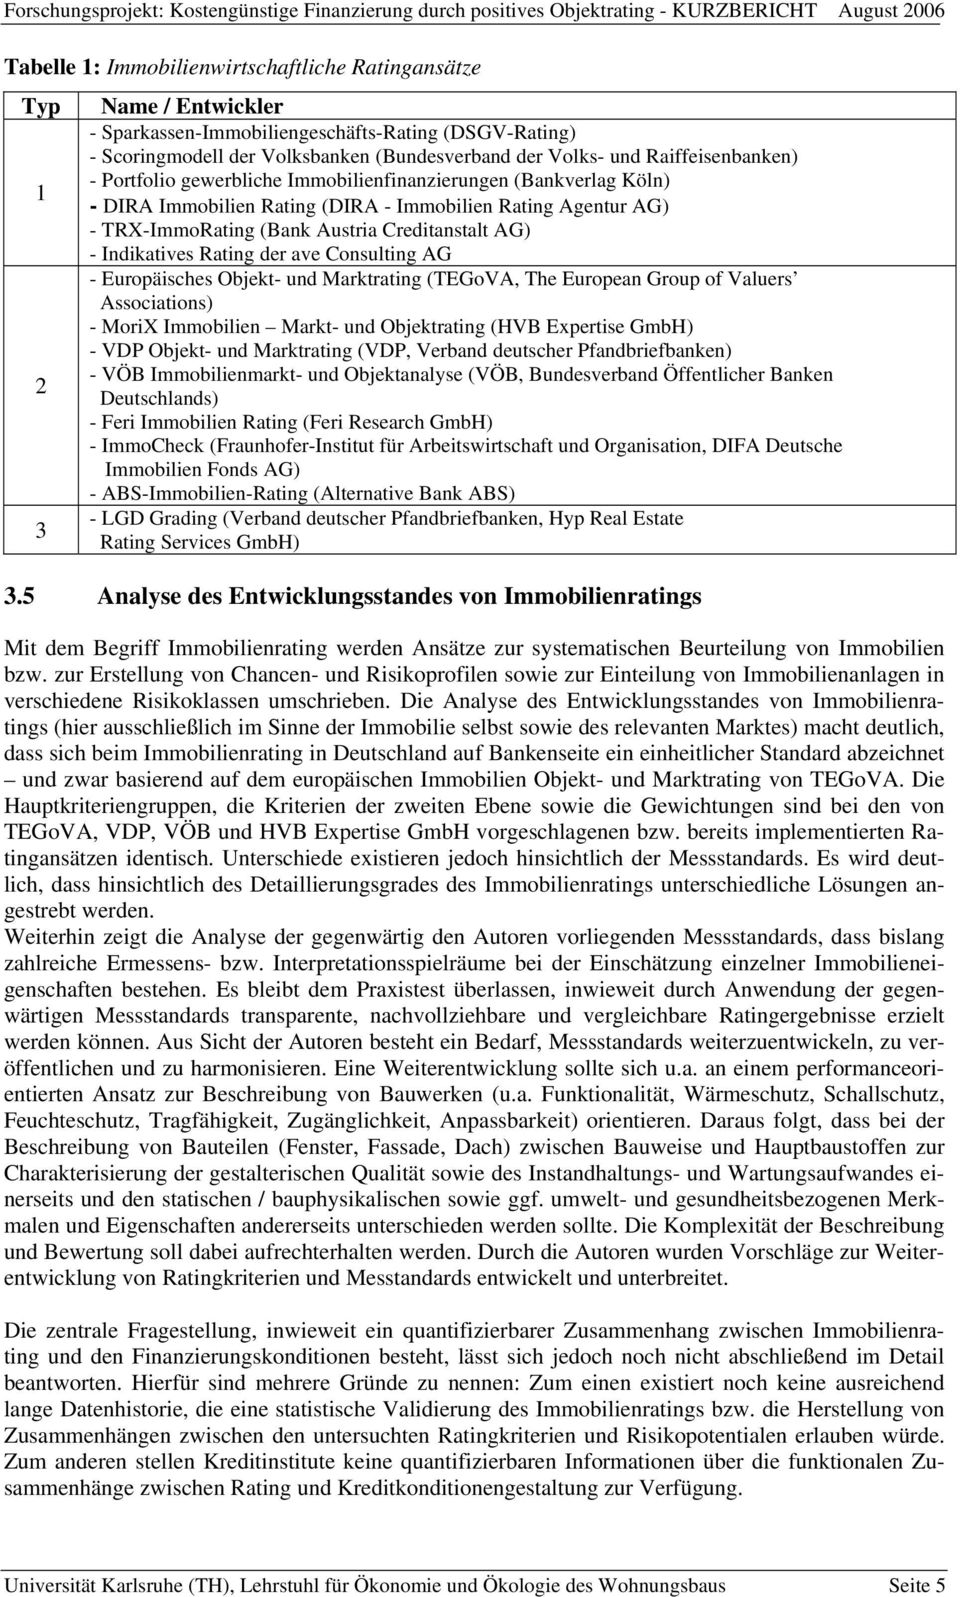 Indikatives Rating der ave Consulting AG - Europäisches Objekt- und Marktrating (TEGoVA, The European Group of Valuers Associations) - MoriX Immobilien Markt- und Objektrating (HVB Expertise GmbH) -